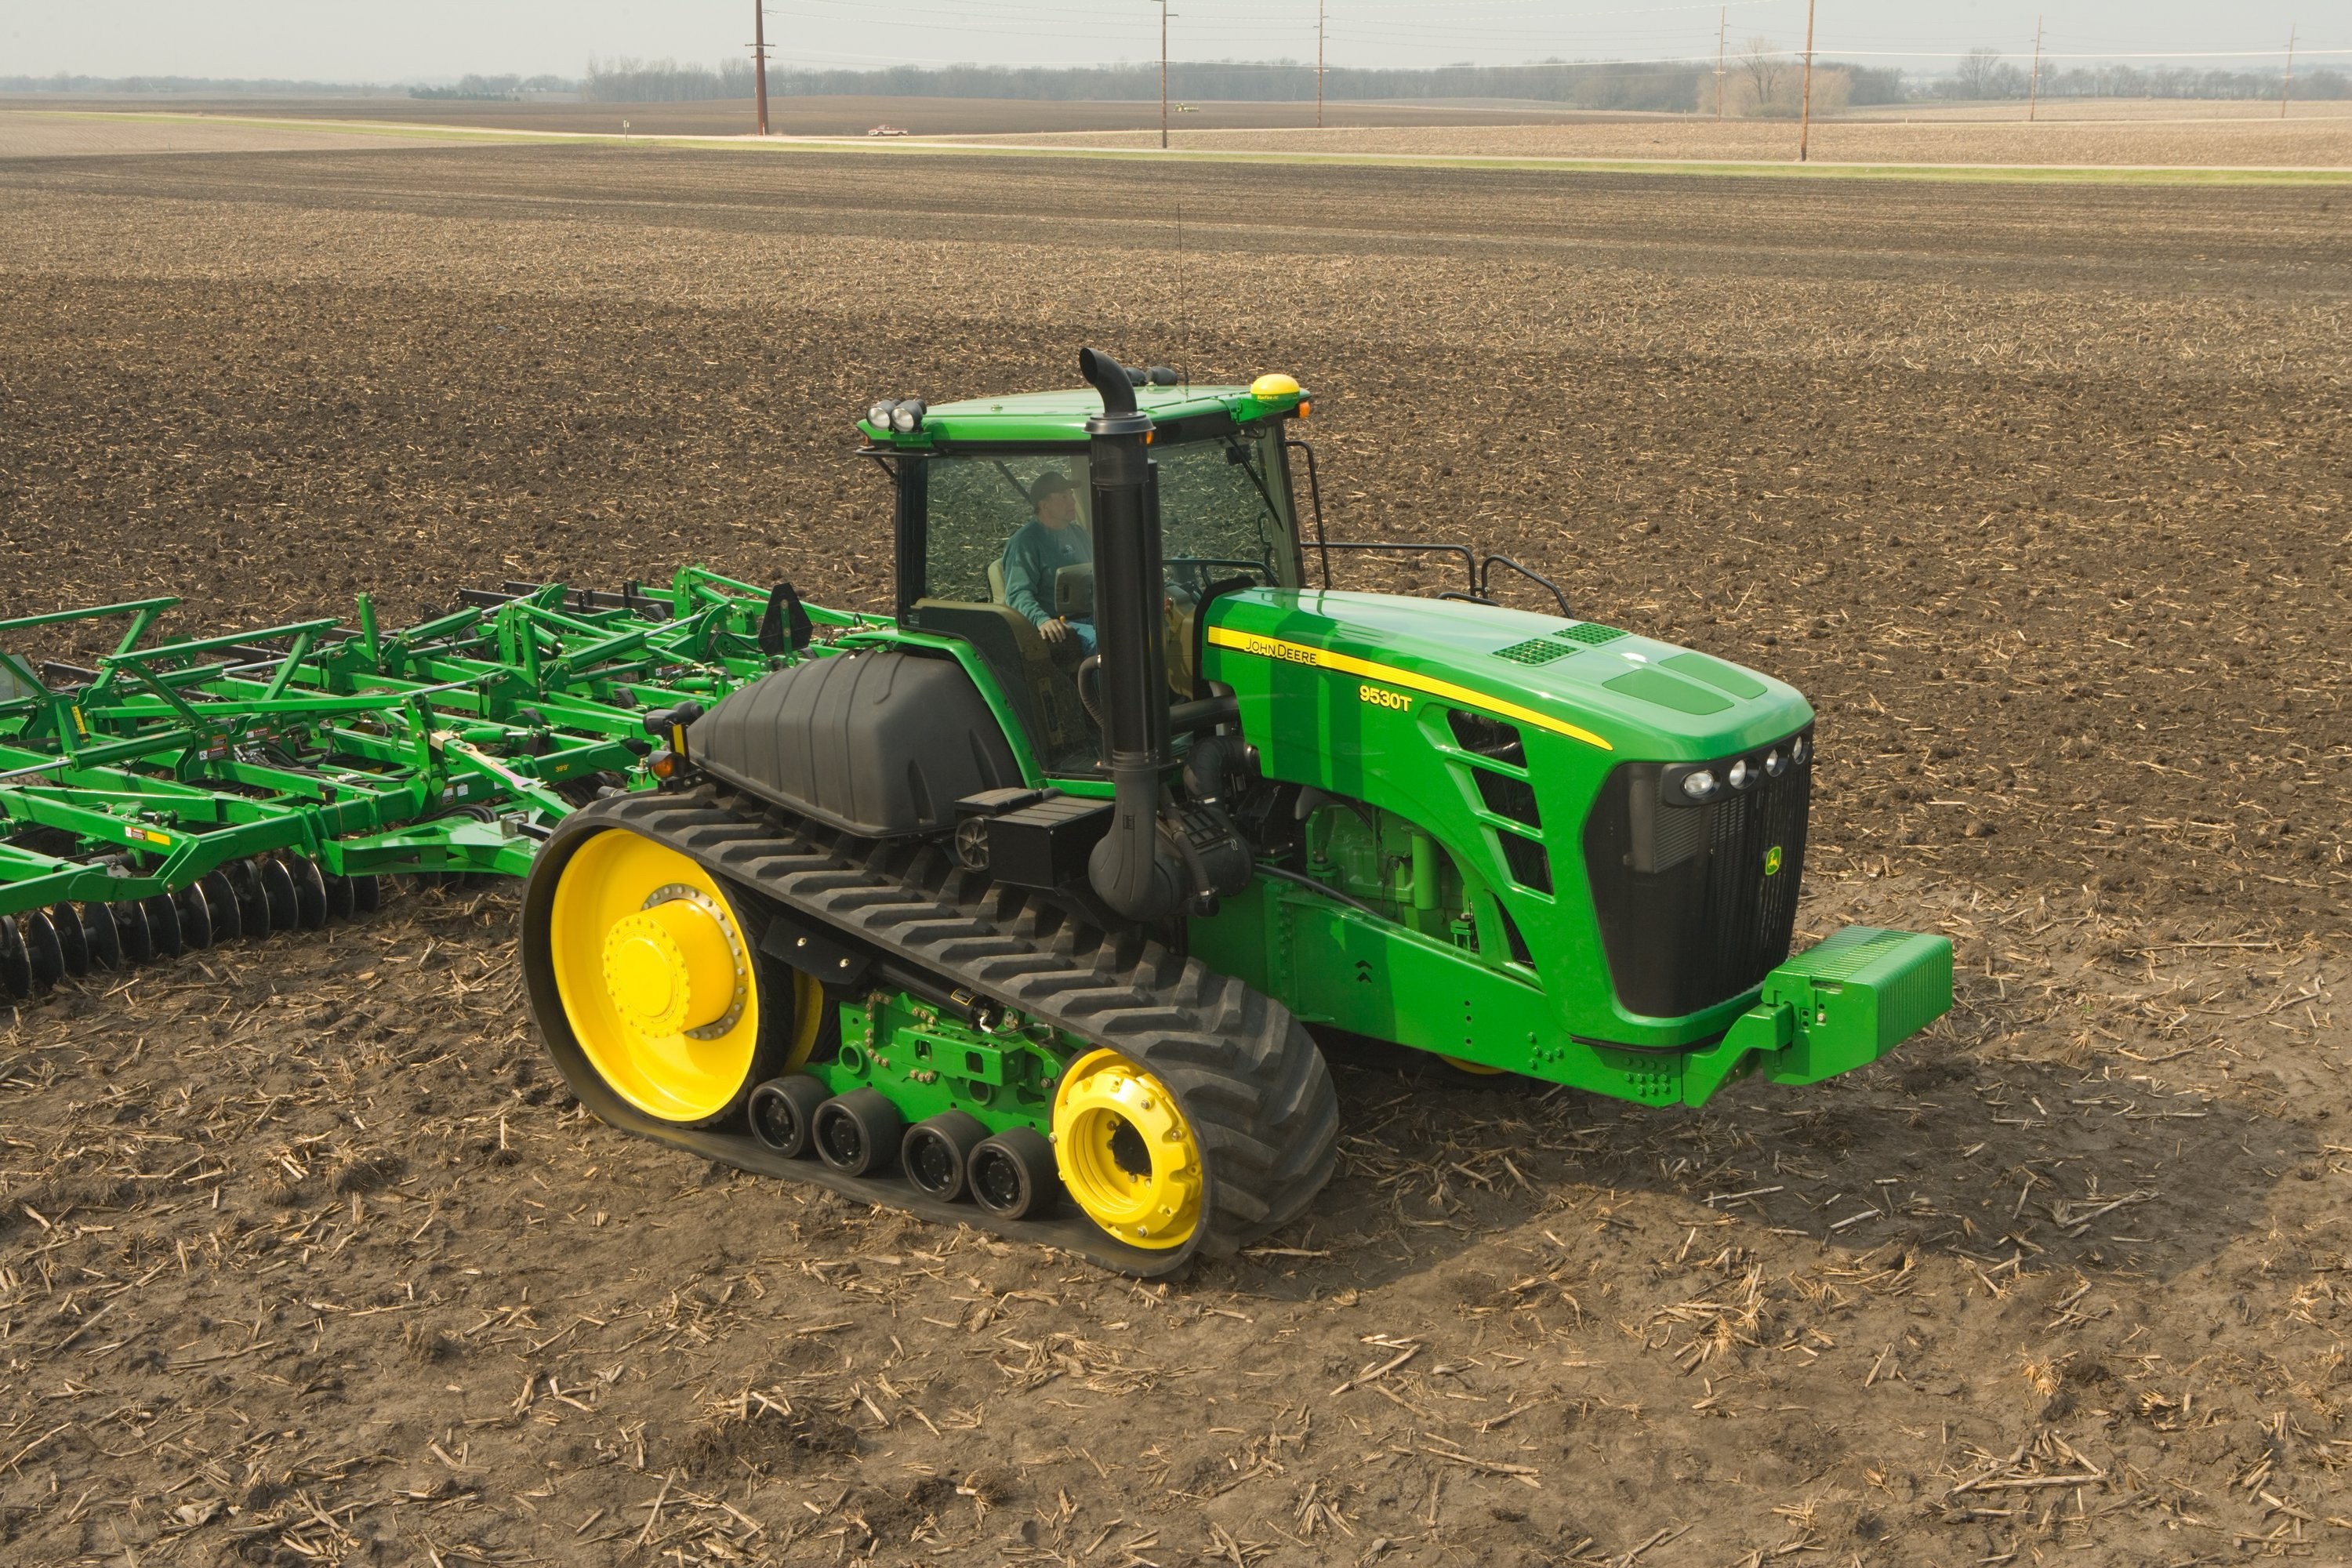 3000x2000 John-deere-tractor-farm-industrial-farming-1jdeere-construction-